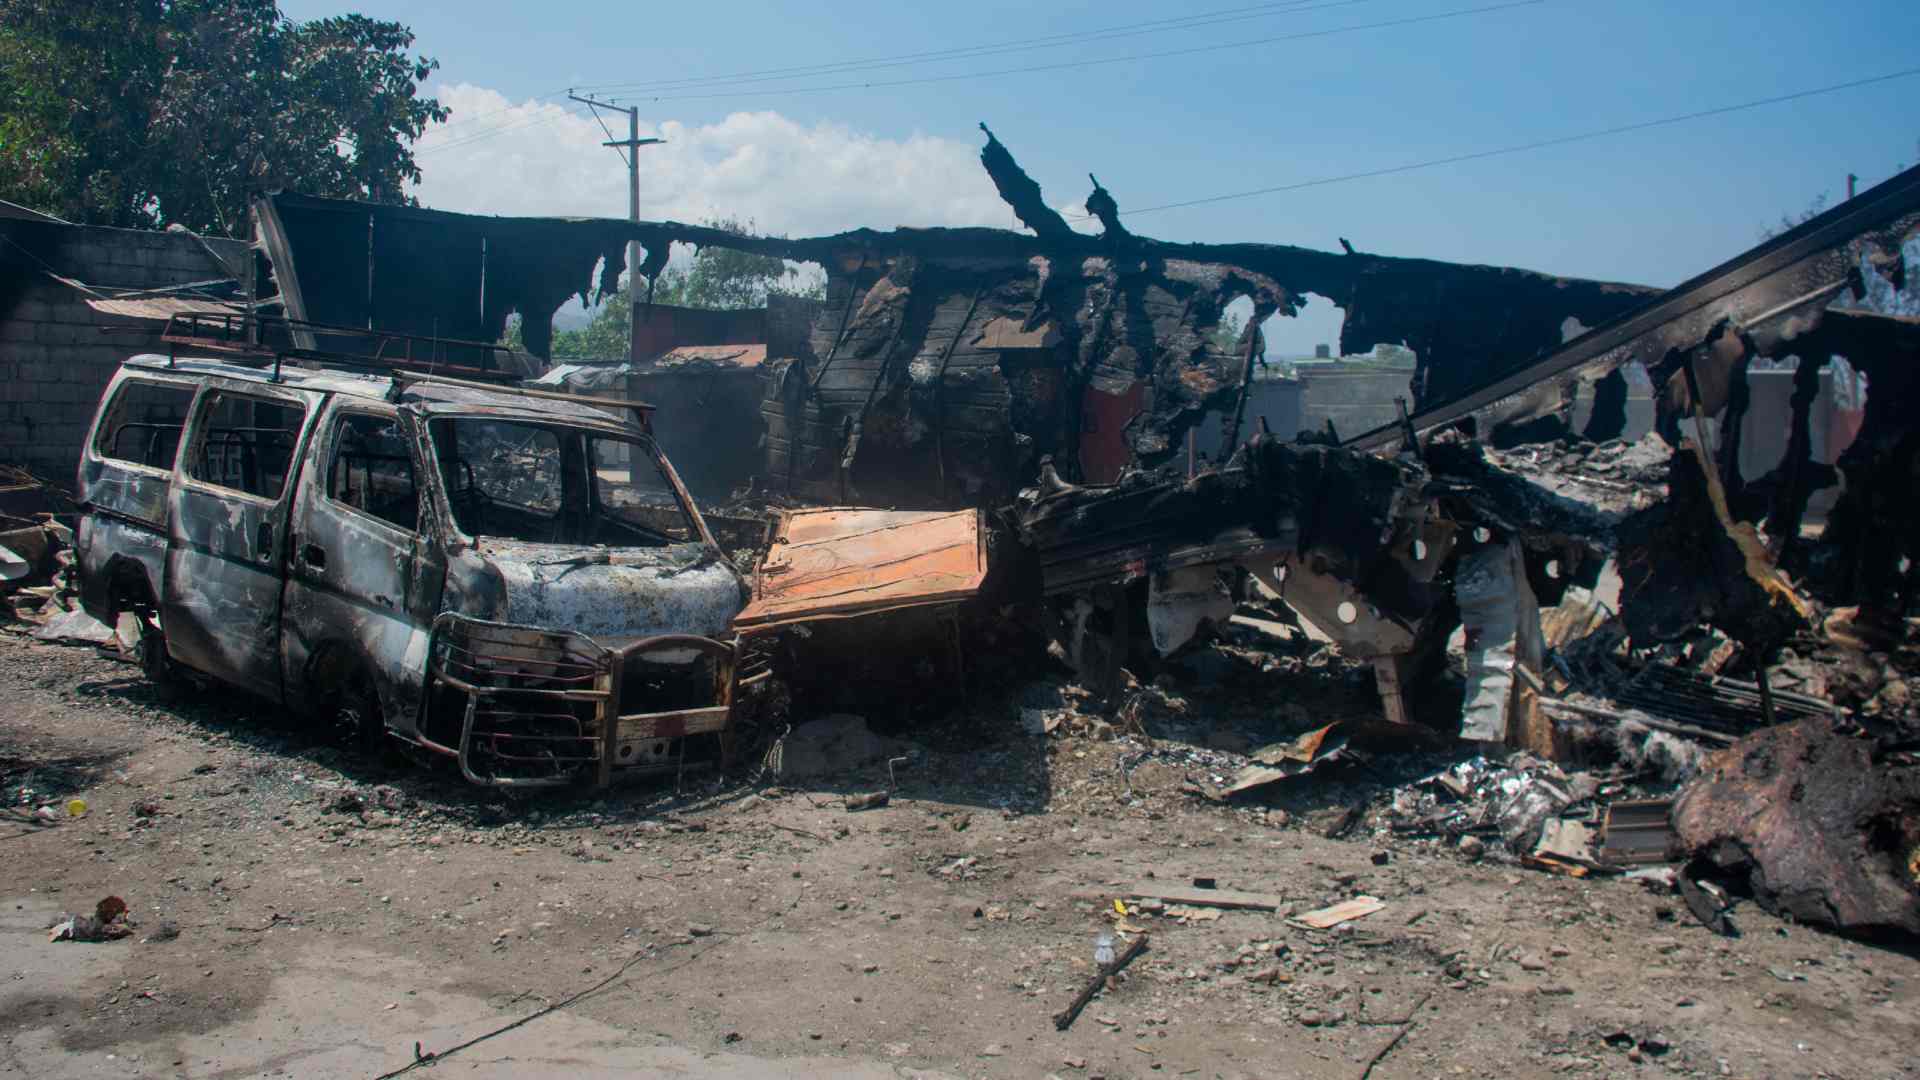 “Ante situación de seguridad”: Evacúan a varios hondureños de Haití